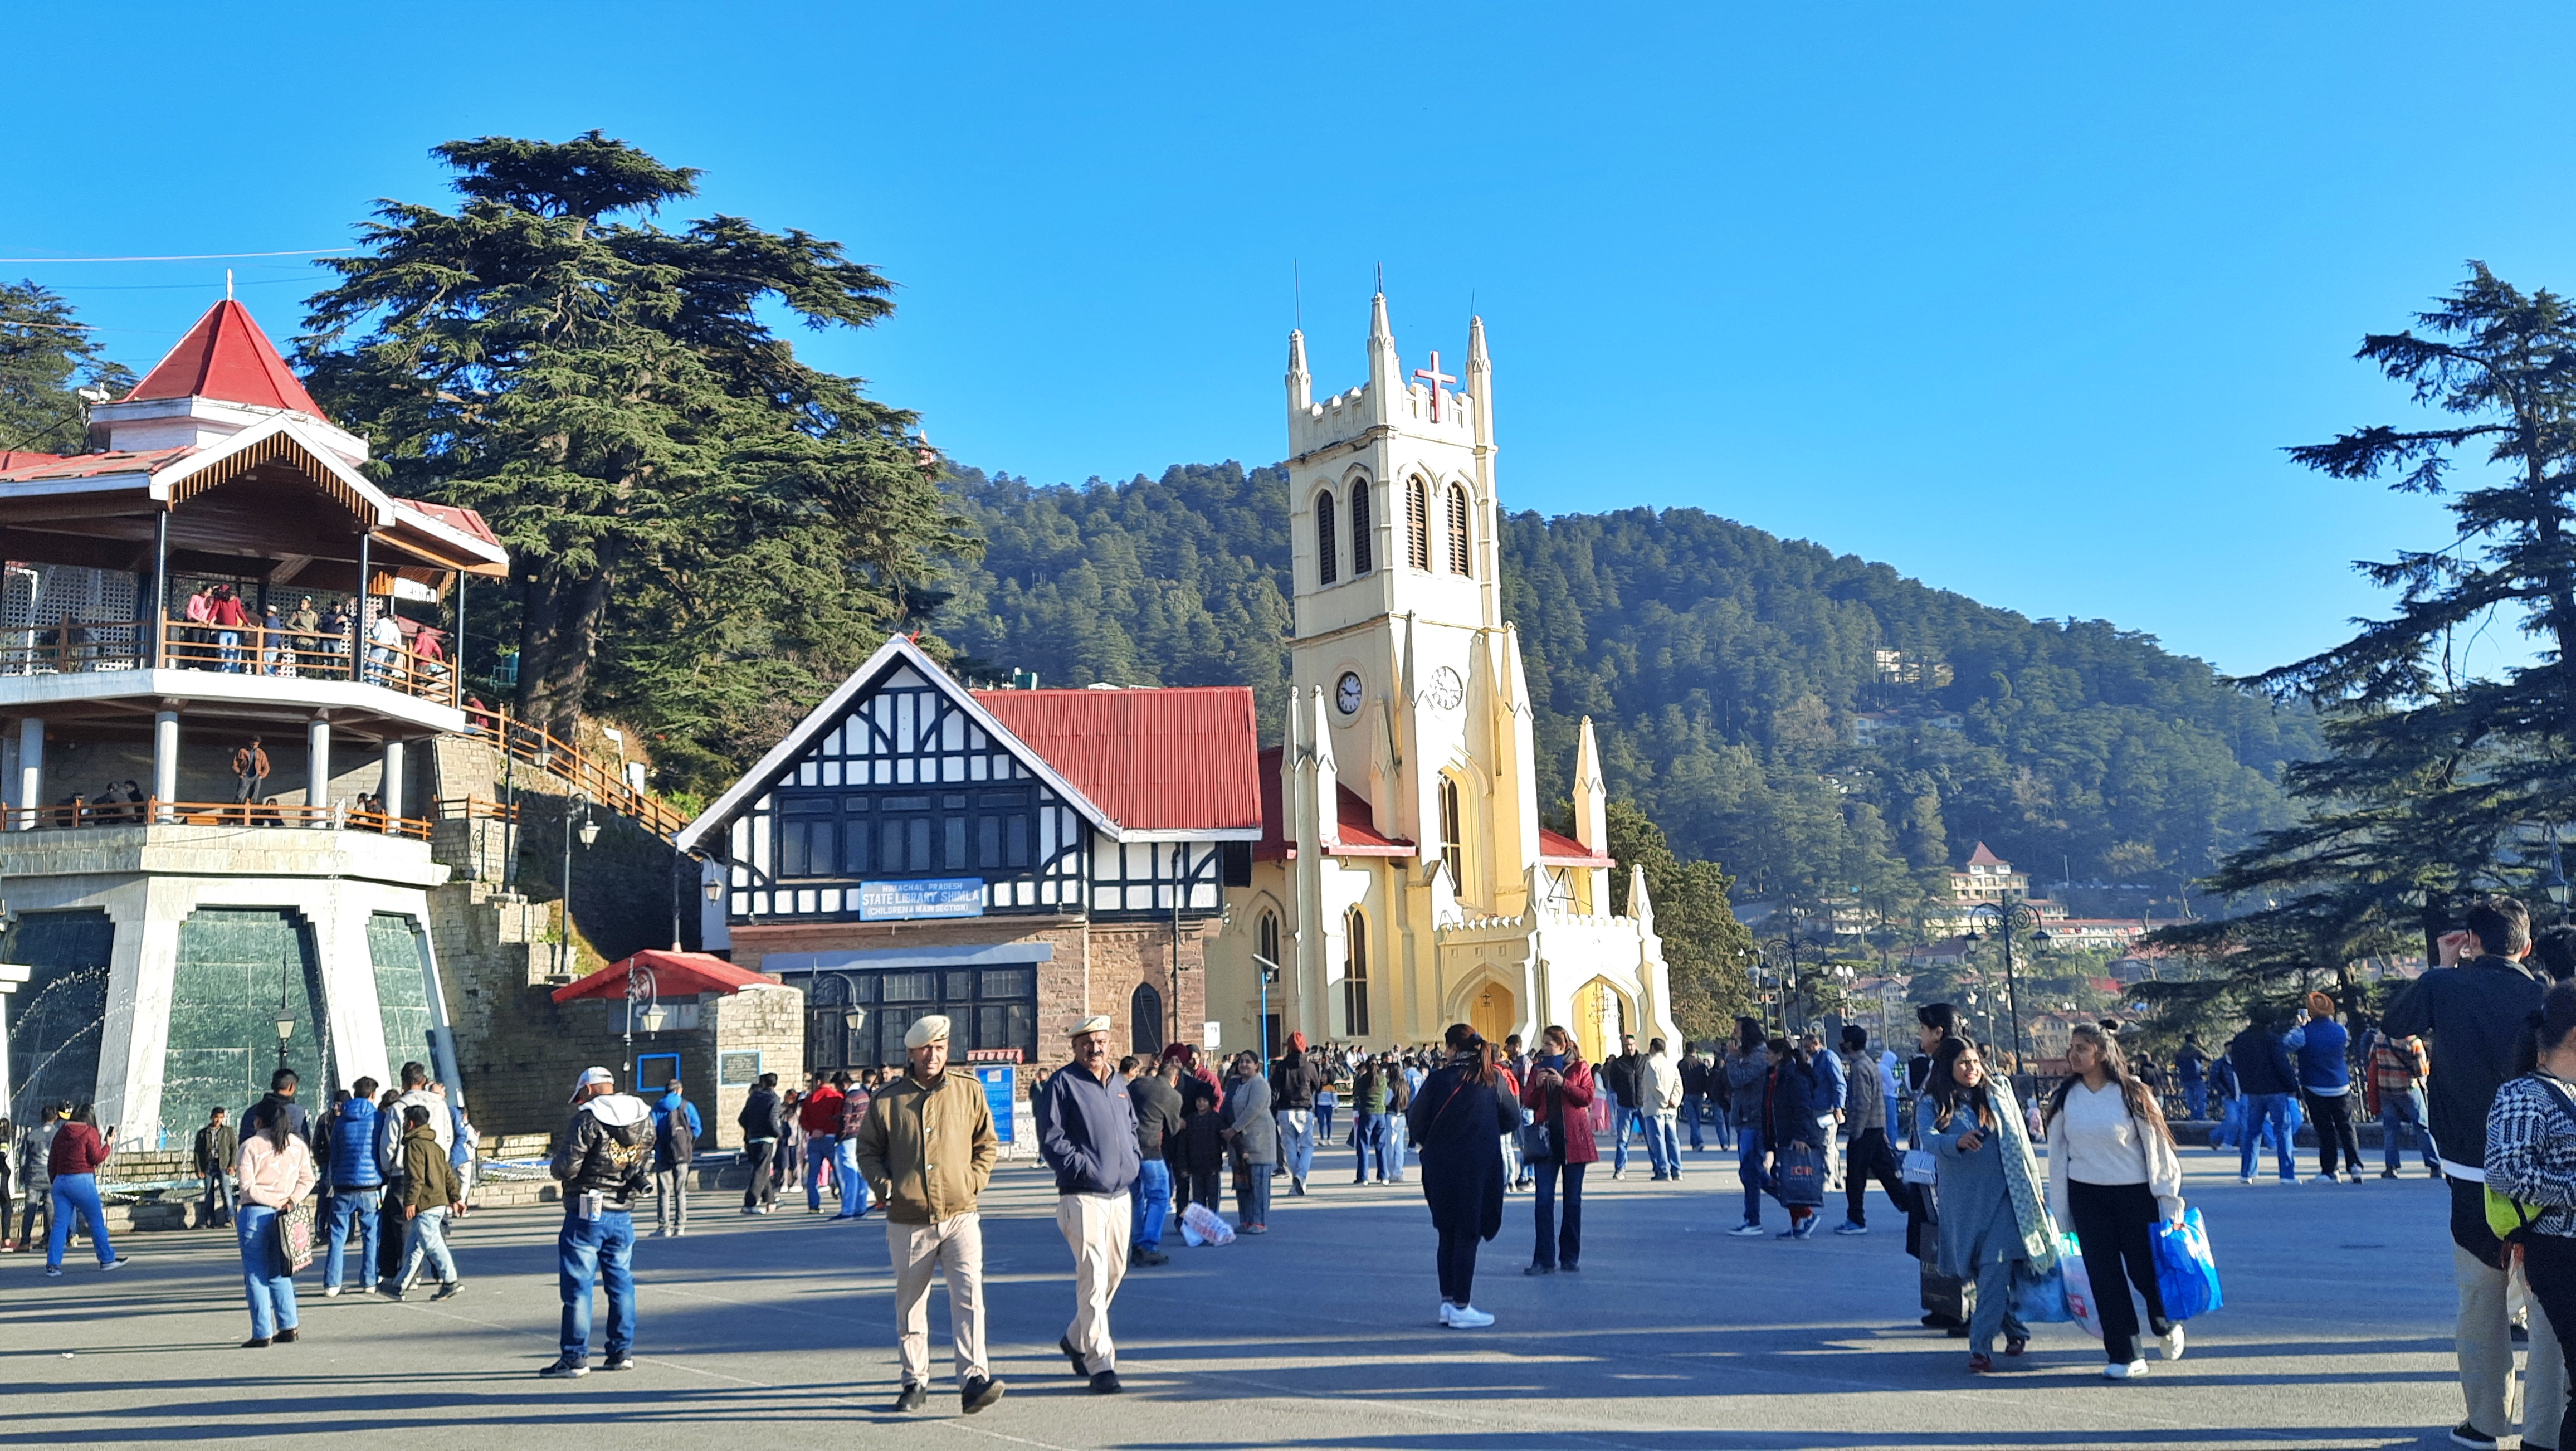 Preparations for Christmas in Shimla